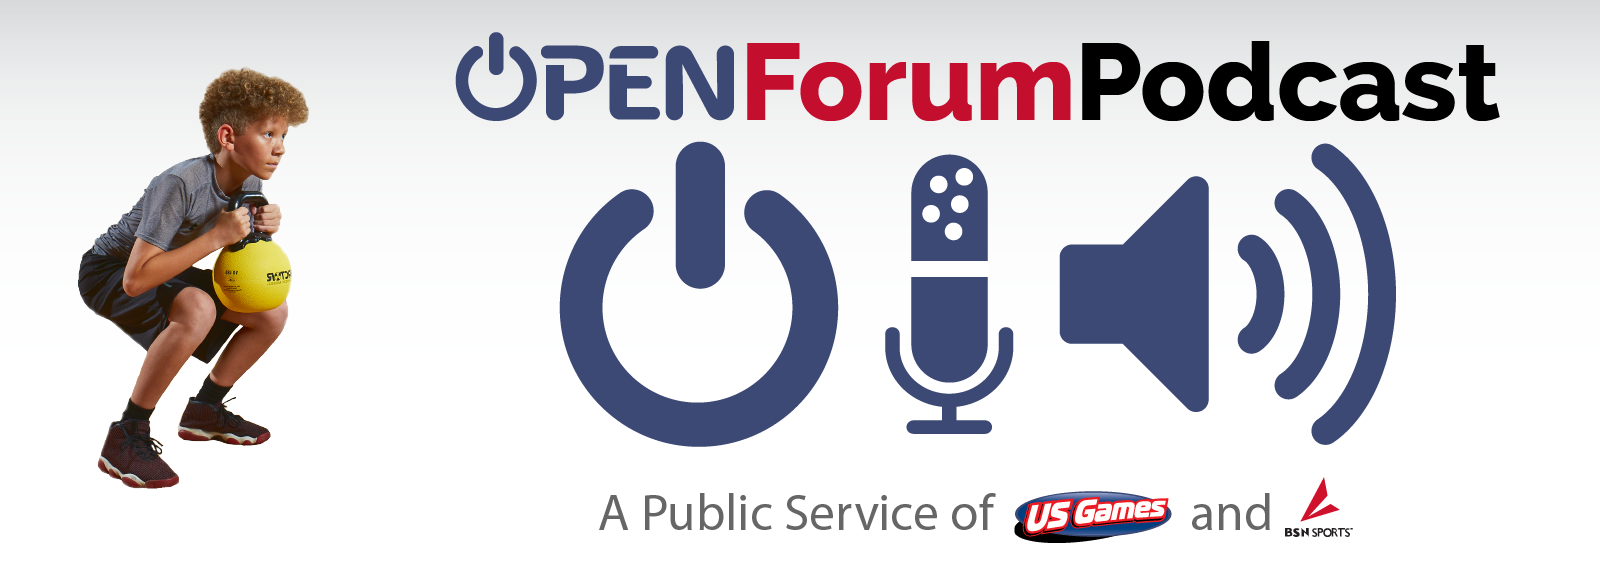 The OPENForum Podcast